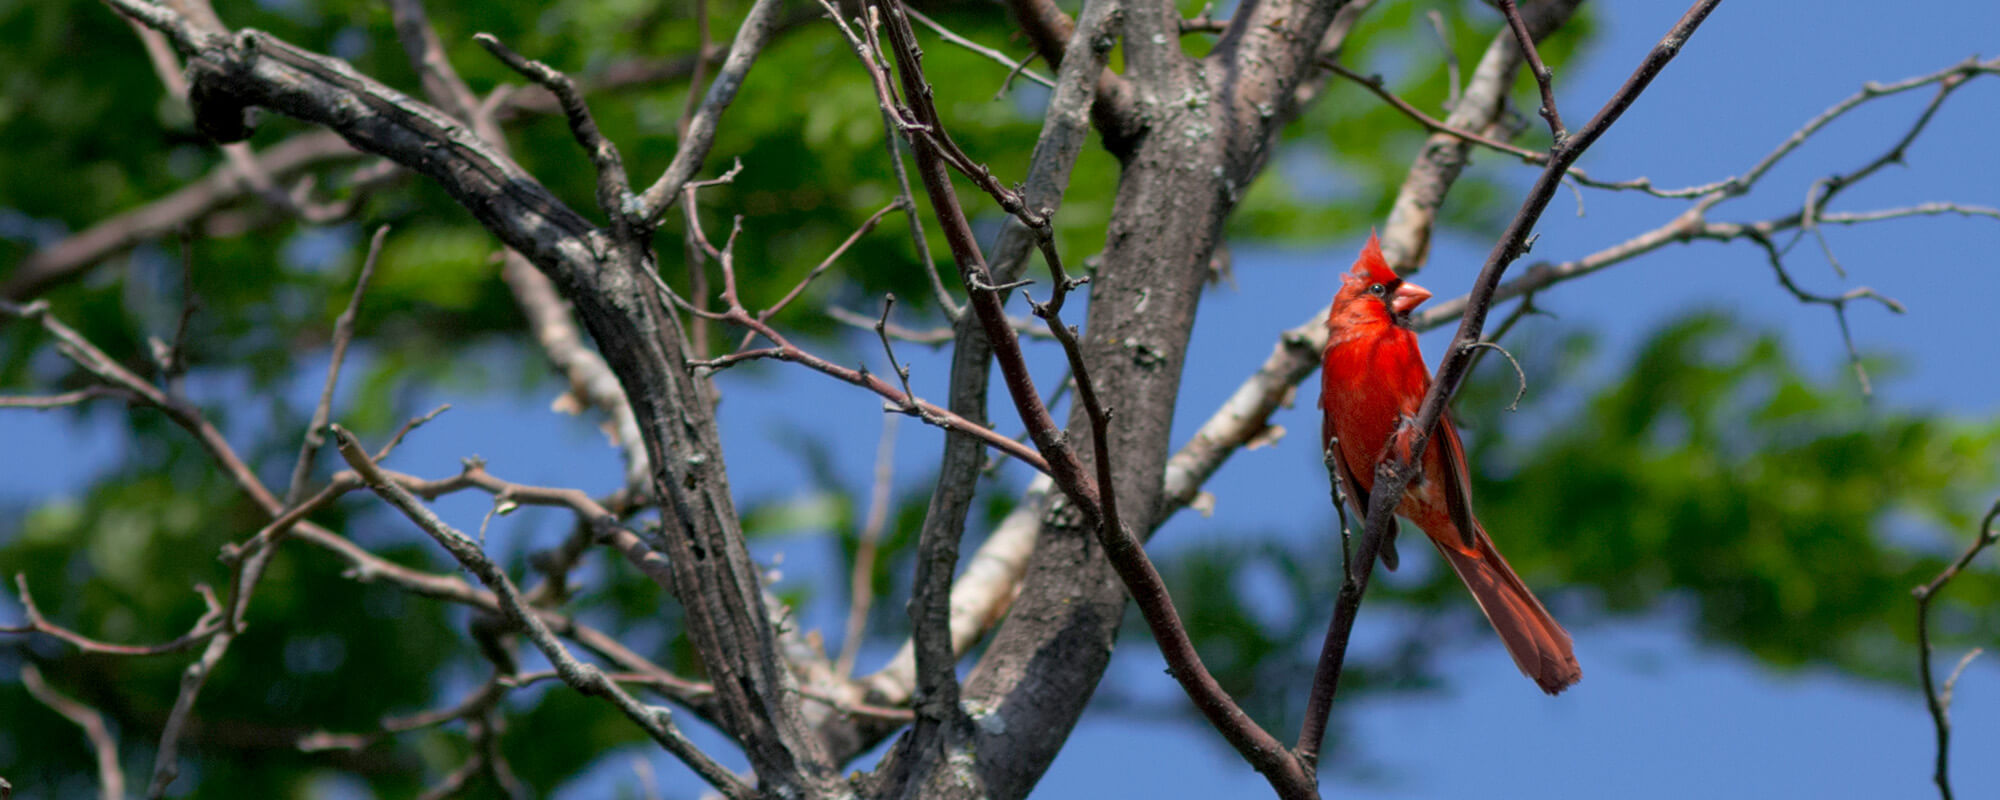 Cardinal bird in tree